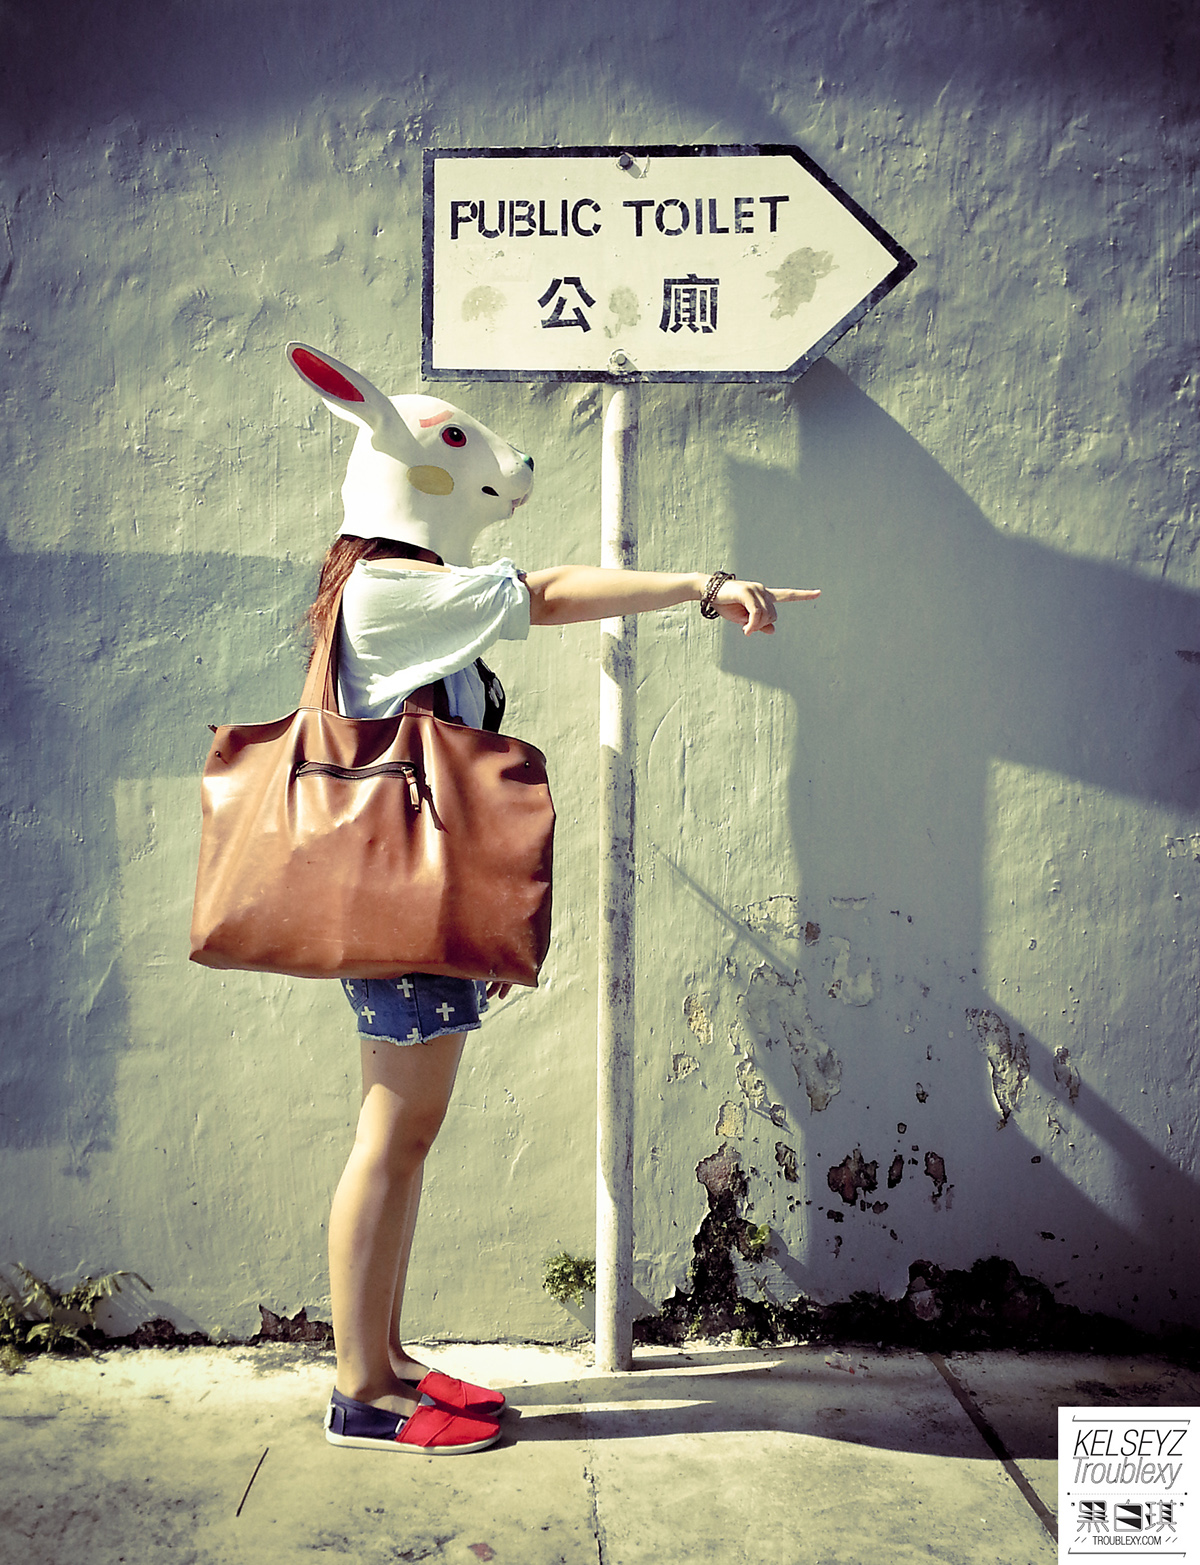 Adobe Portfolio Runaway bunny head kelseyz troublexy photo gallery creative idea 黑白琪 插画流浪日志 香港 中环 hongkong 有趣摄影 creative thinking